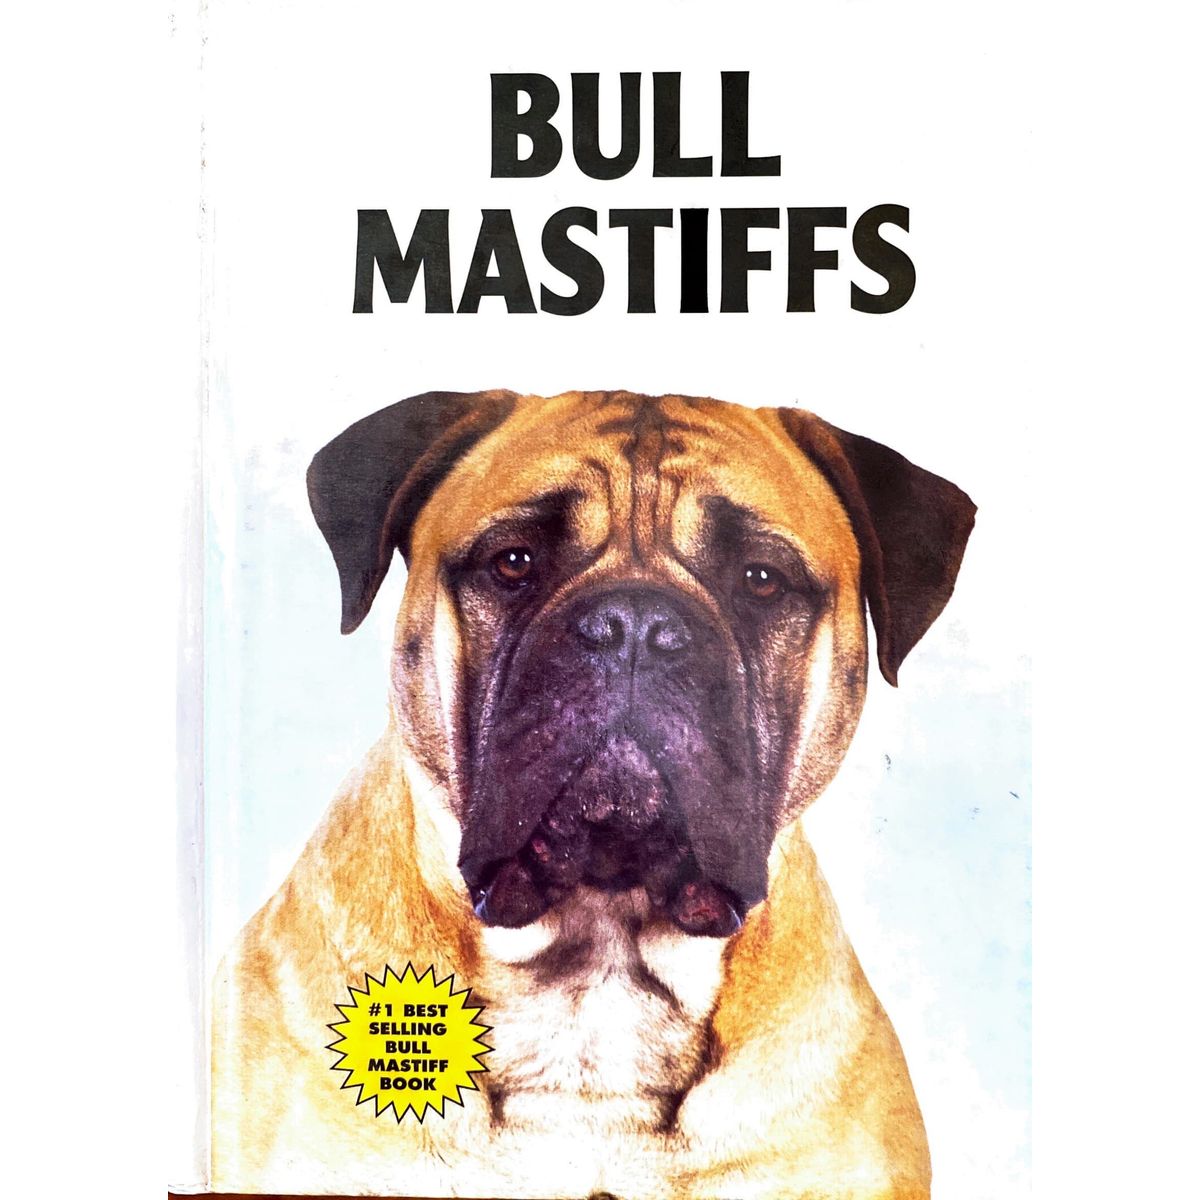 ISBN: 9780793813698 / 0793813697 - Bull Mastiffs by Mary A. Prescott [1995]